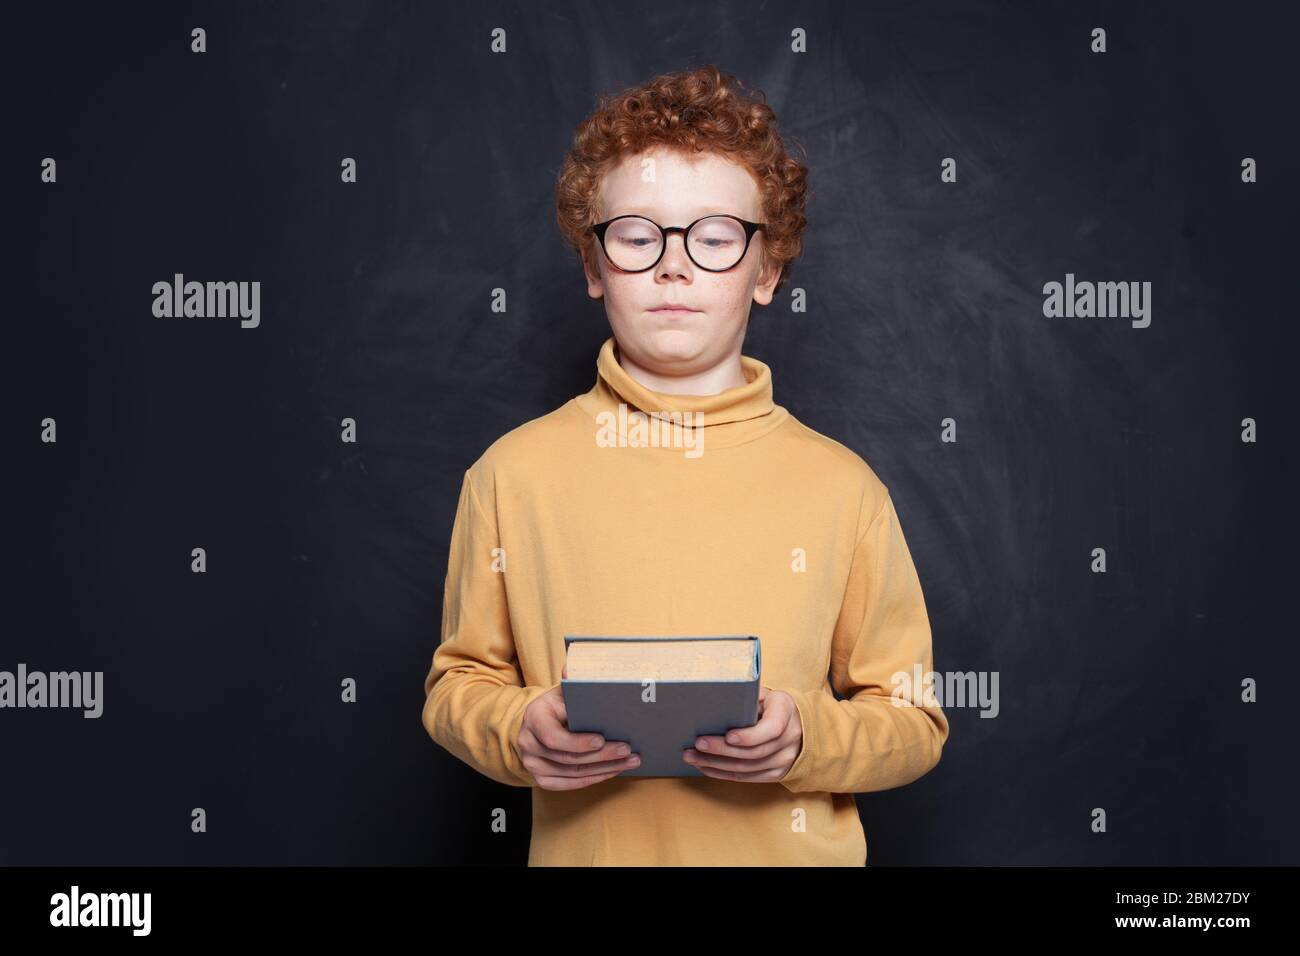 Kid looking at book on school blackboard background Stock Photo